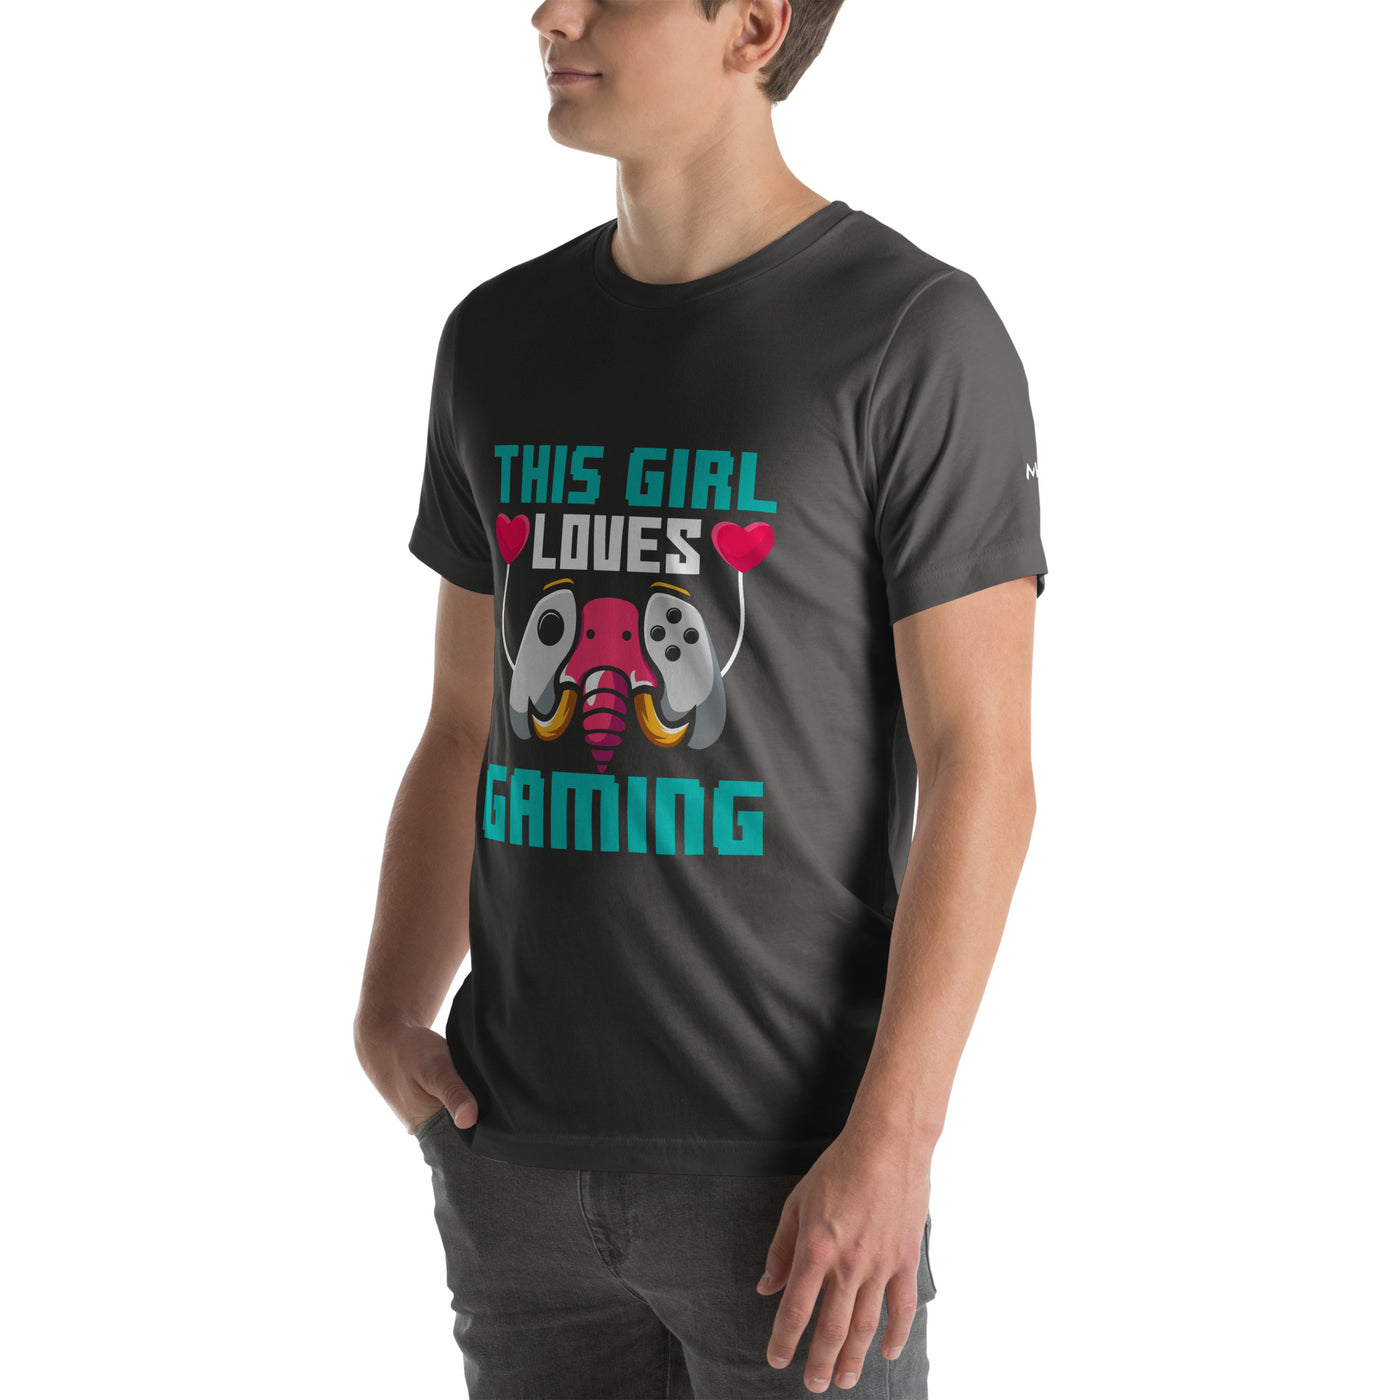 This girl Loves video games ( RiMa ) - Unisex t-shirt